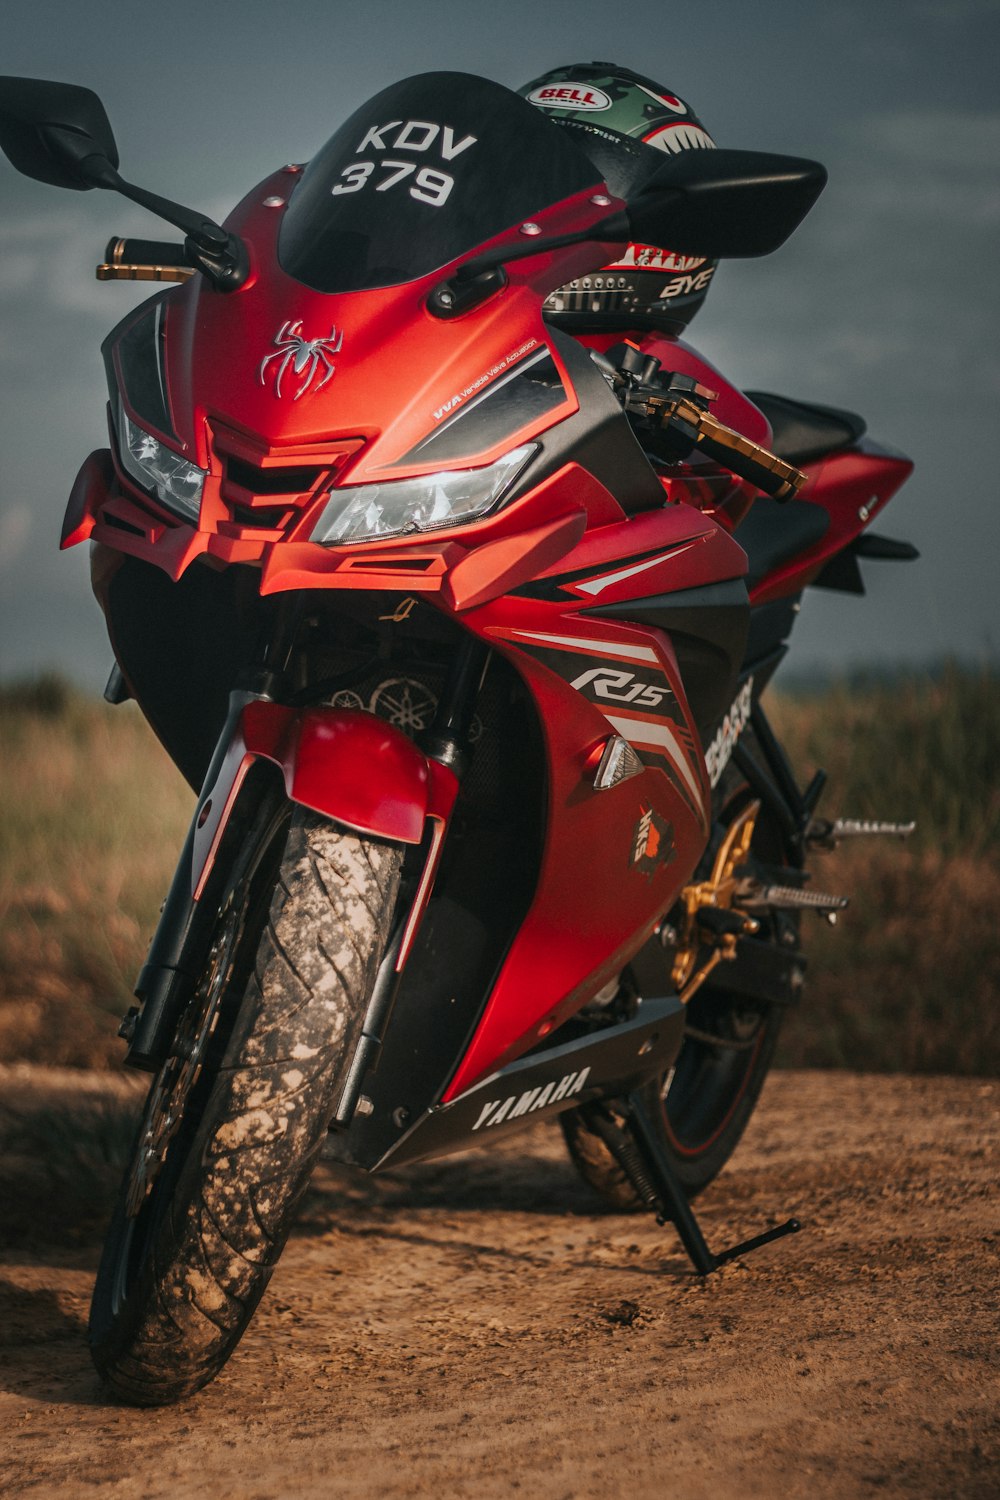 fotografia macro di moto sportive Yamaha rosse e nere